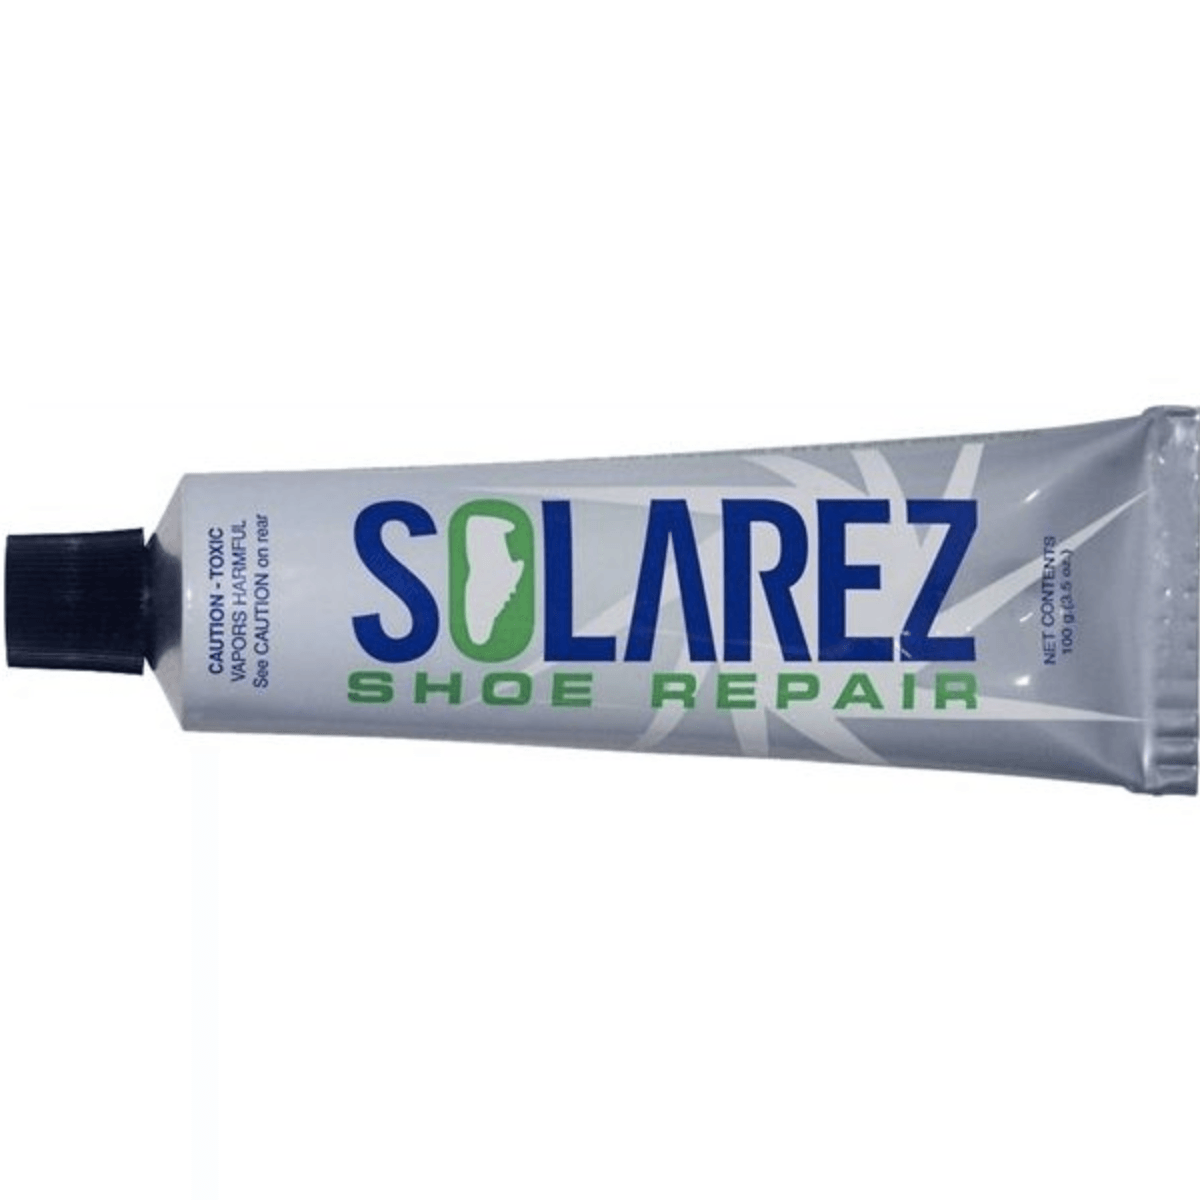 Solarez Shoes repair 